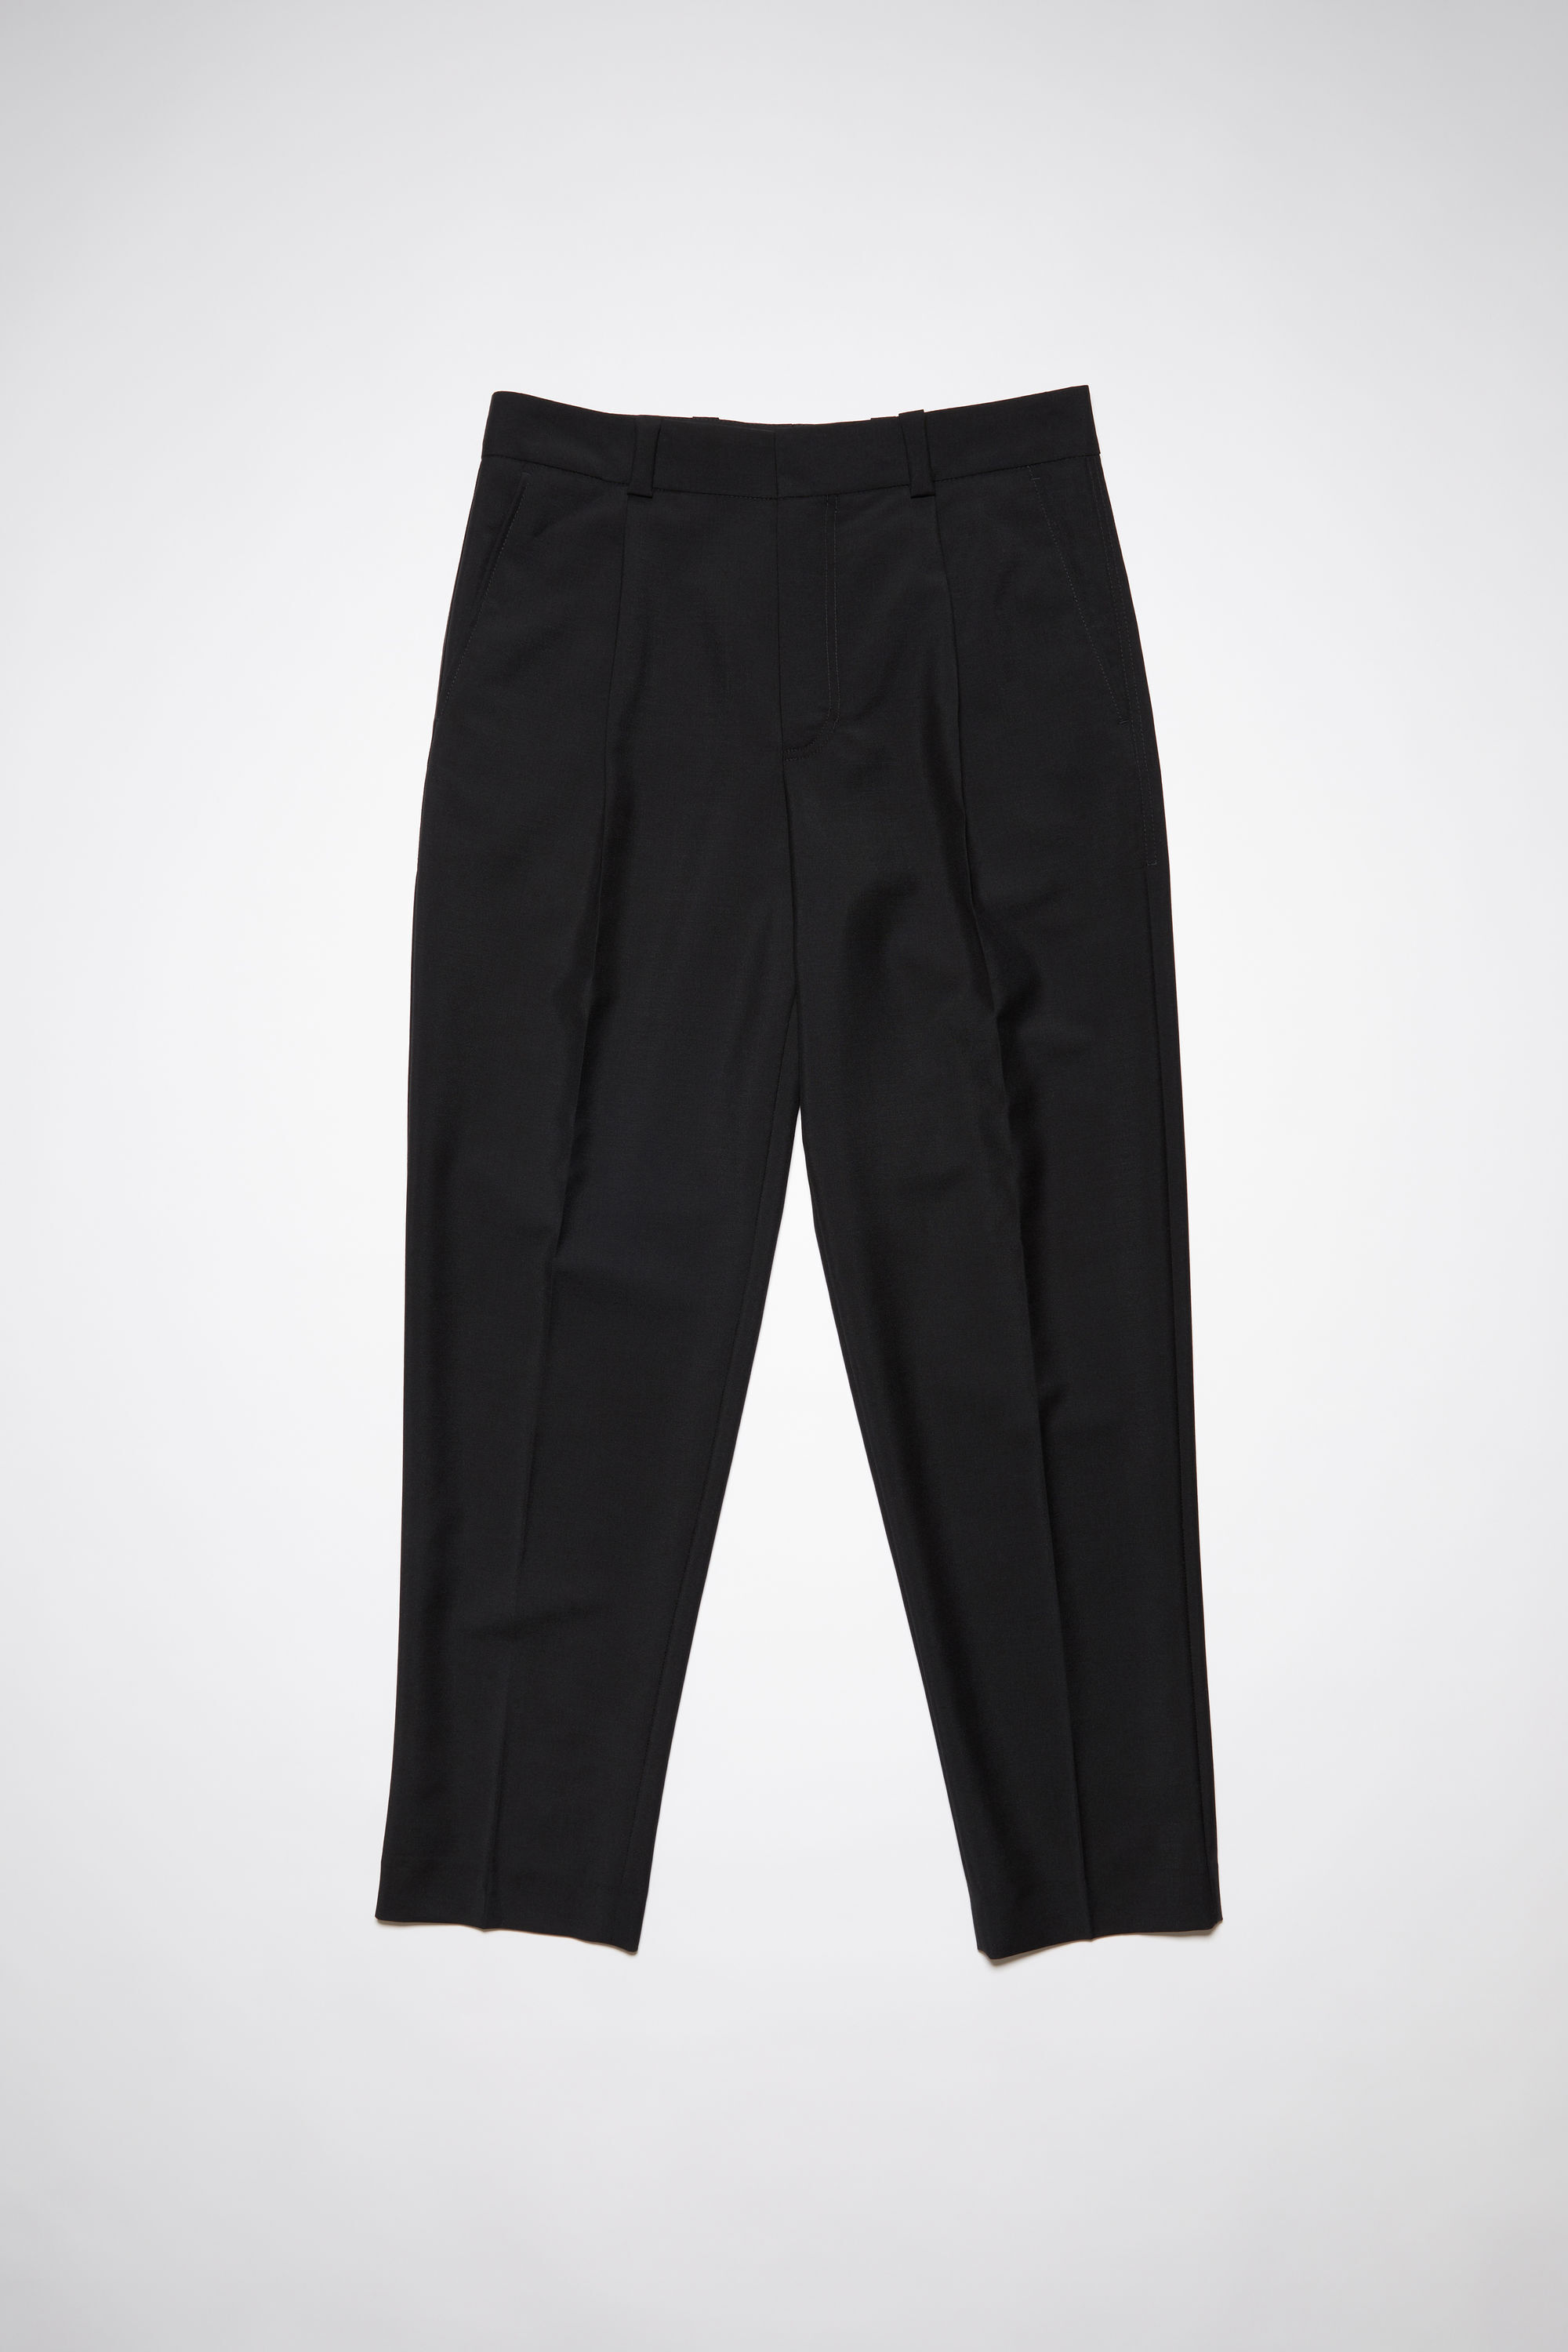 20,000円\u003cBASE MARK\u003eNotched Wool Pants - BLACK